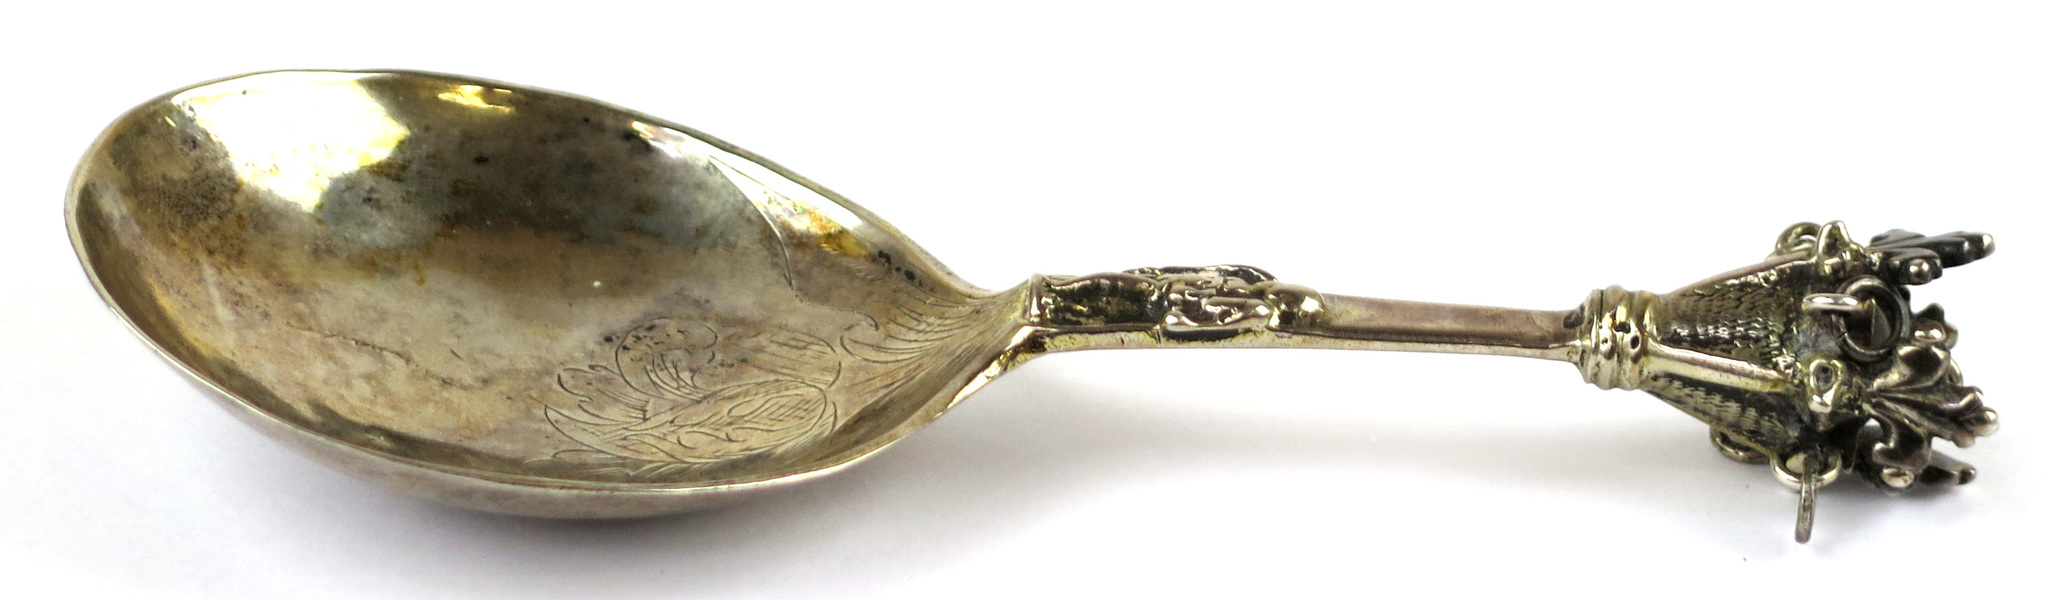 Supsked, så kallad skrammelsked, silver, barock, sekelskiftet 1700, kronformad knopp med ringformade hängen, _11889a_8d960ba34cc65e6_lg.jpeg